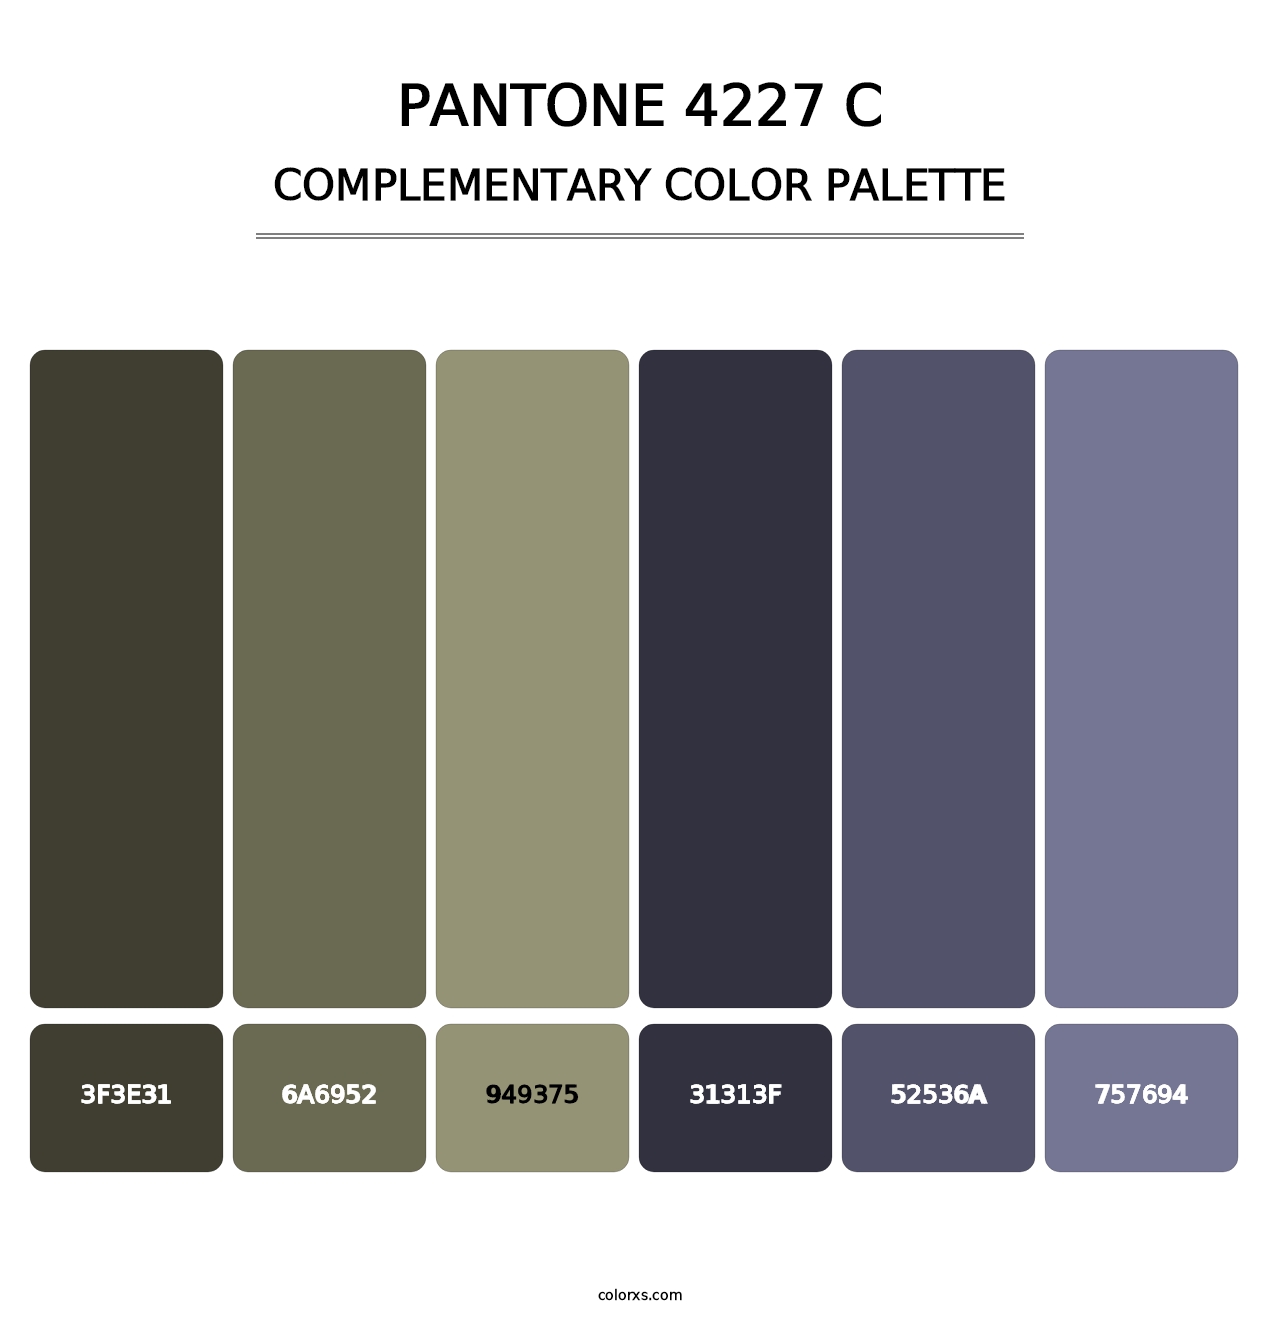 PANTONE 4227 C - Complementary Color Palette